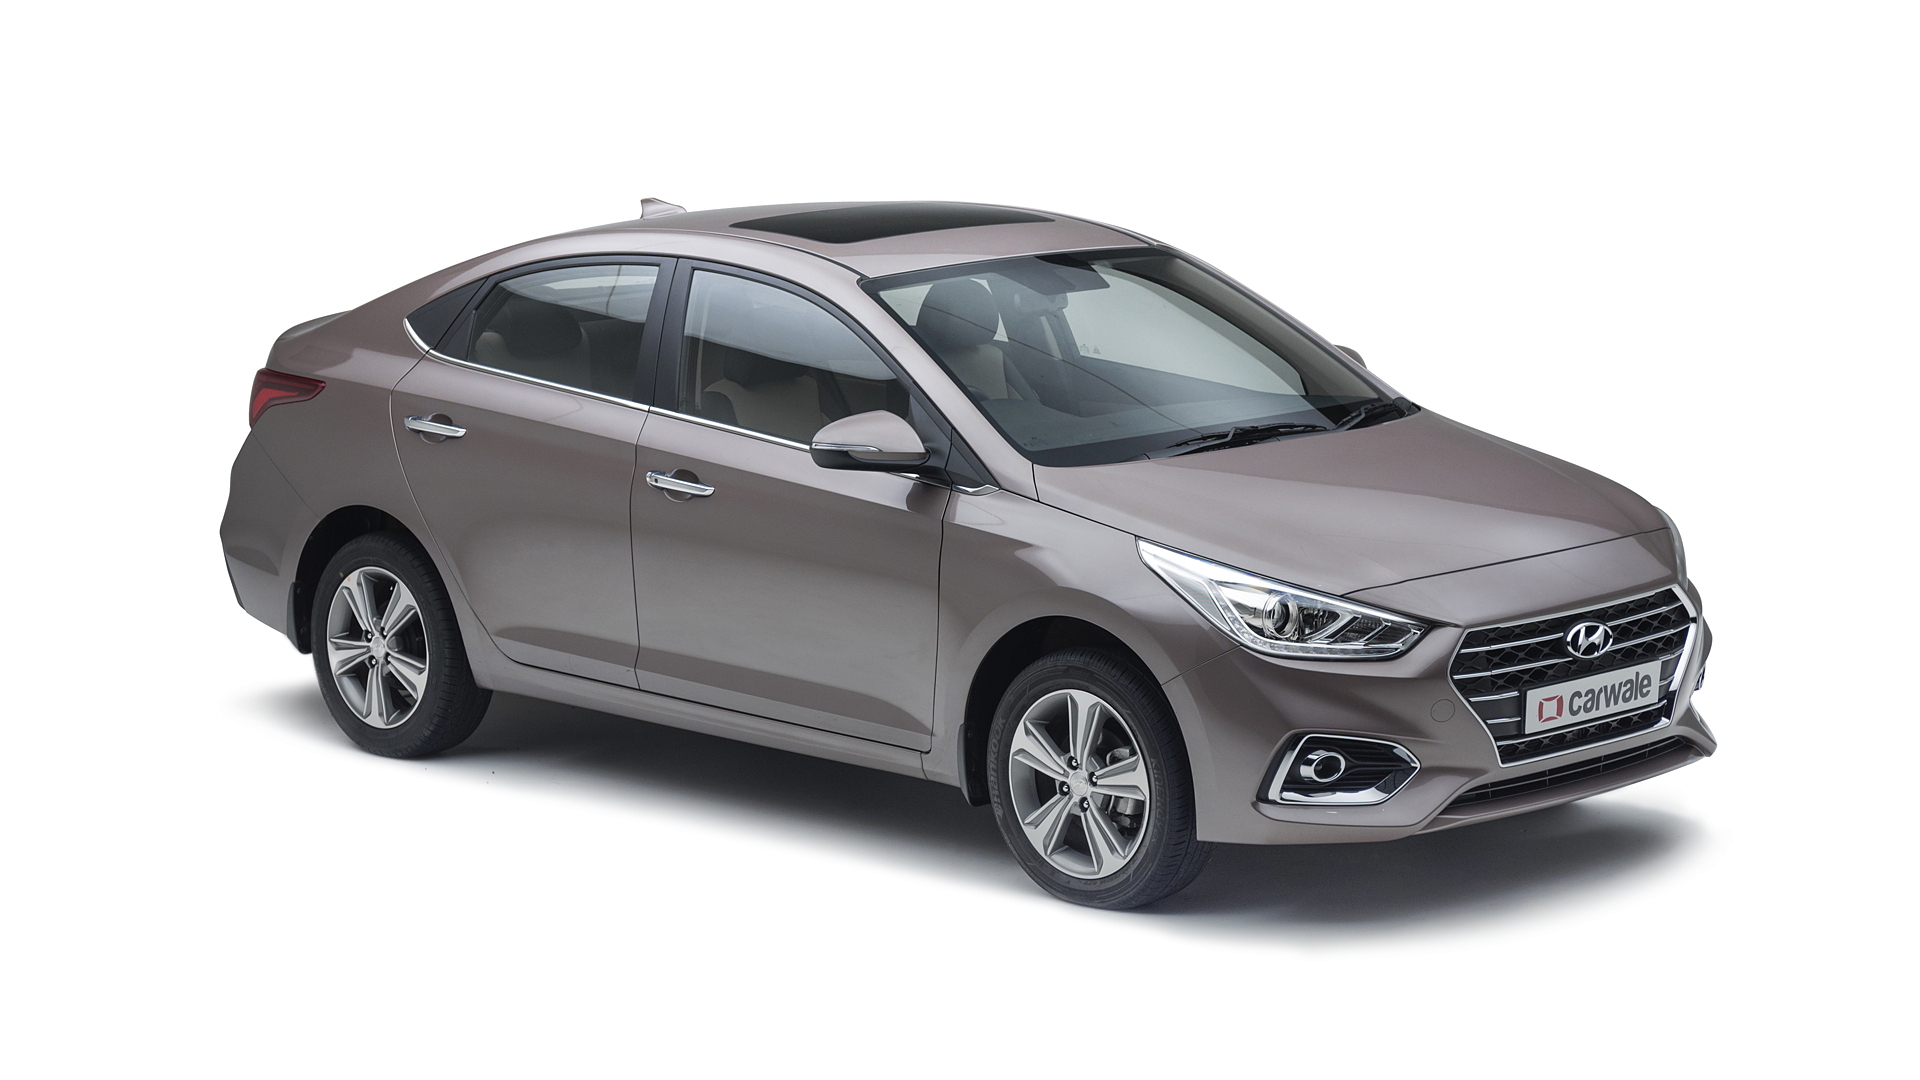 Image result for Hyundai Verna